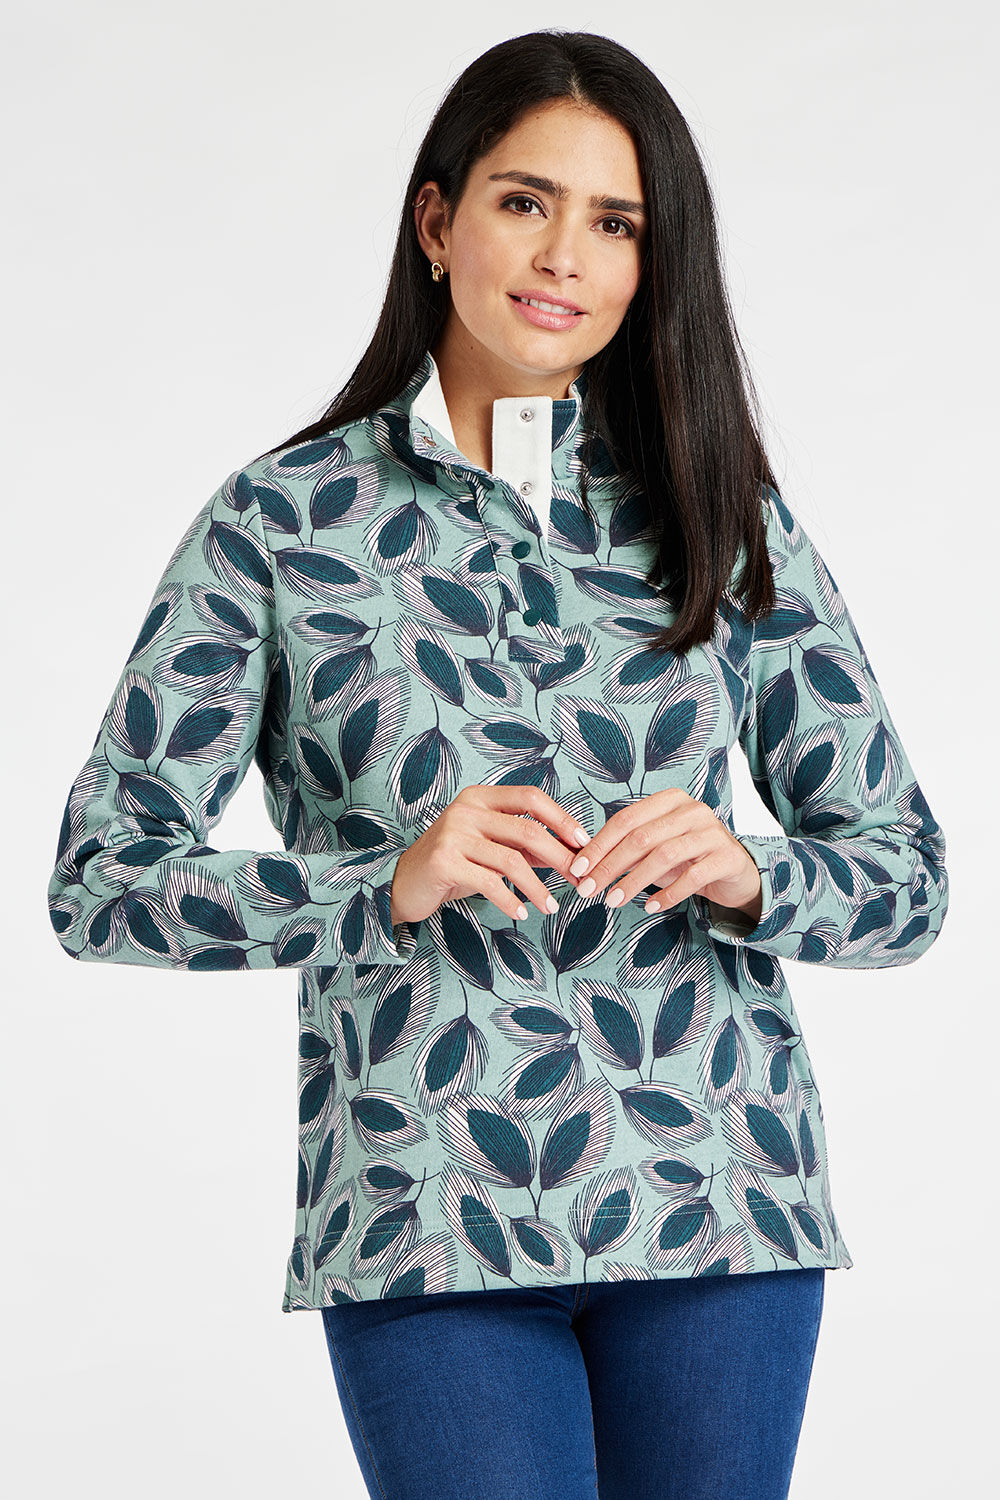 Bonmarche Women’s Green and White Cotton Leaf Print Long Sleeve Funnel Neck Sweatshirt, Size: 18